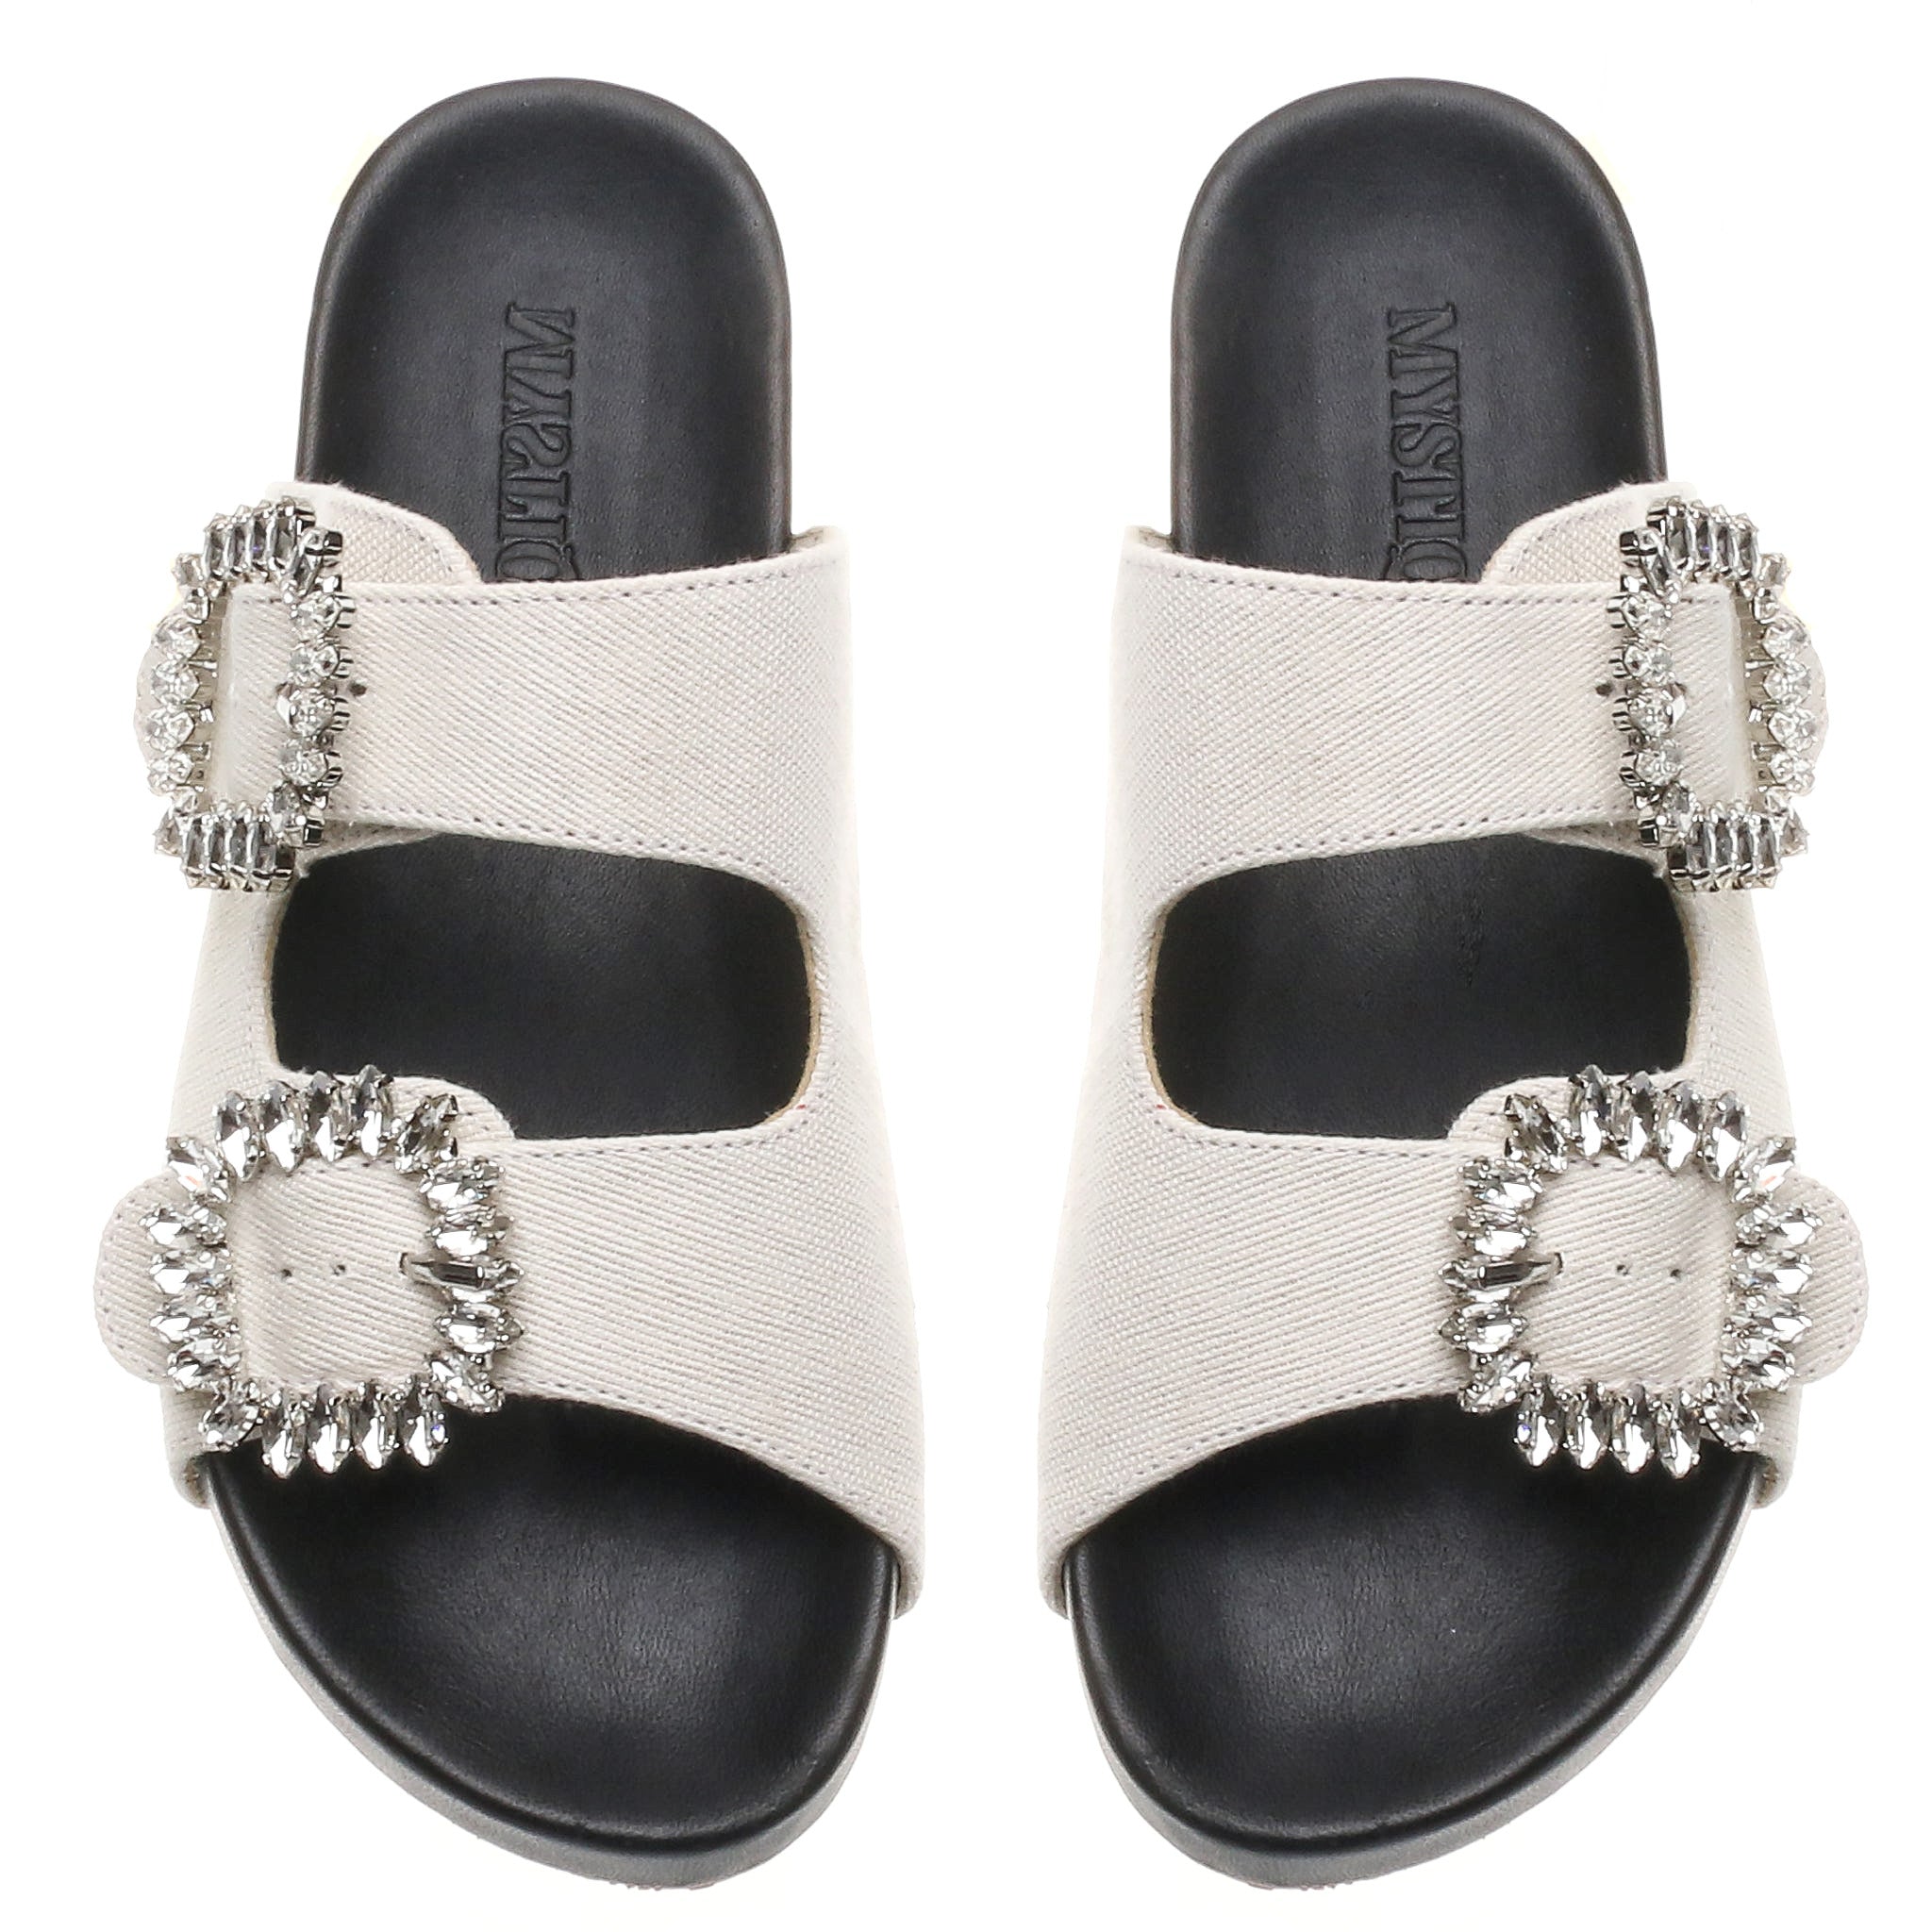 Medina - Women's White Crystal Buckle Slide Sandals | Mystique Sandals